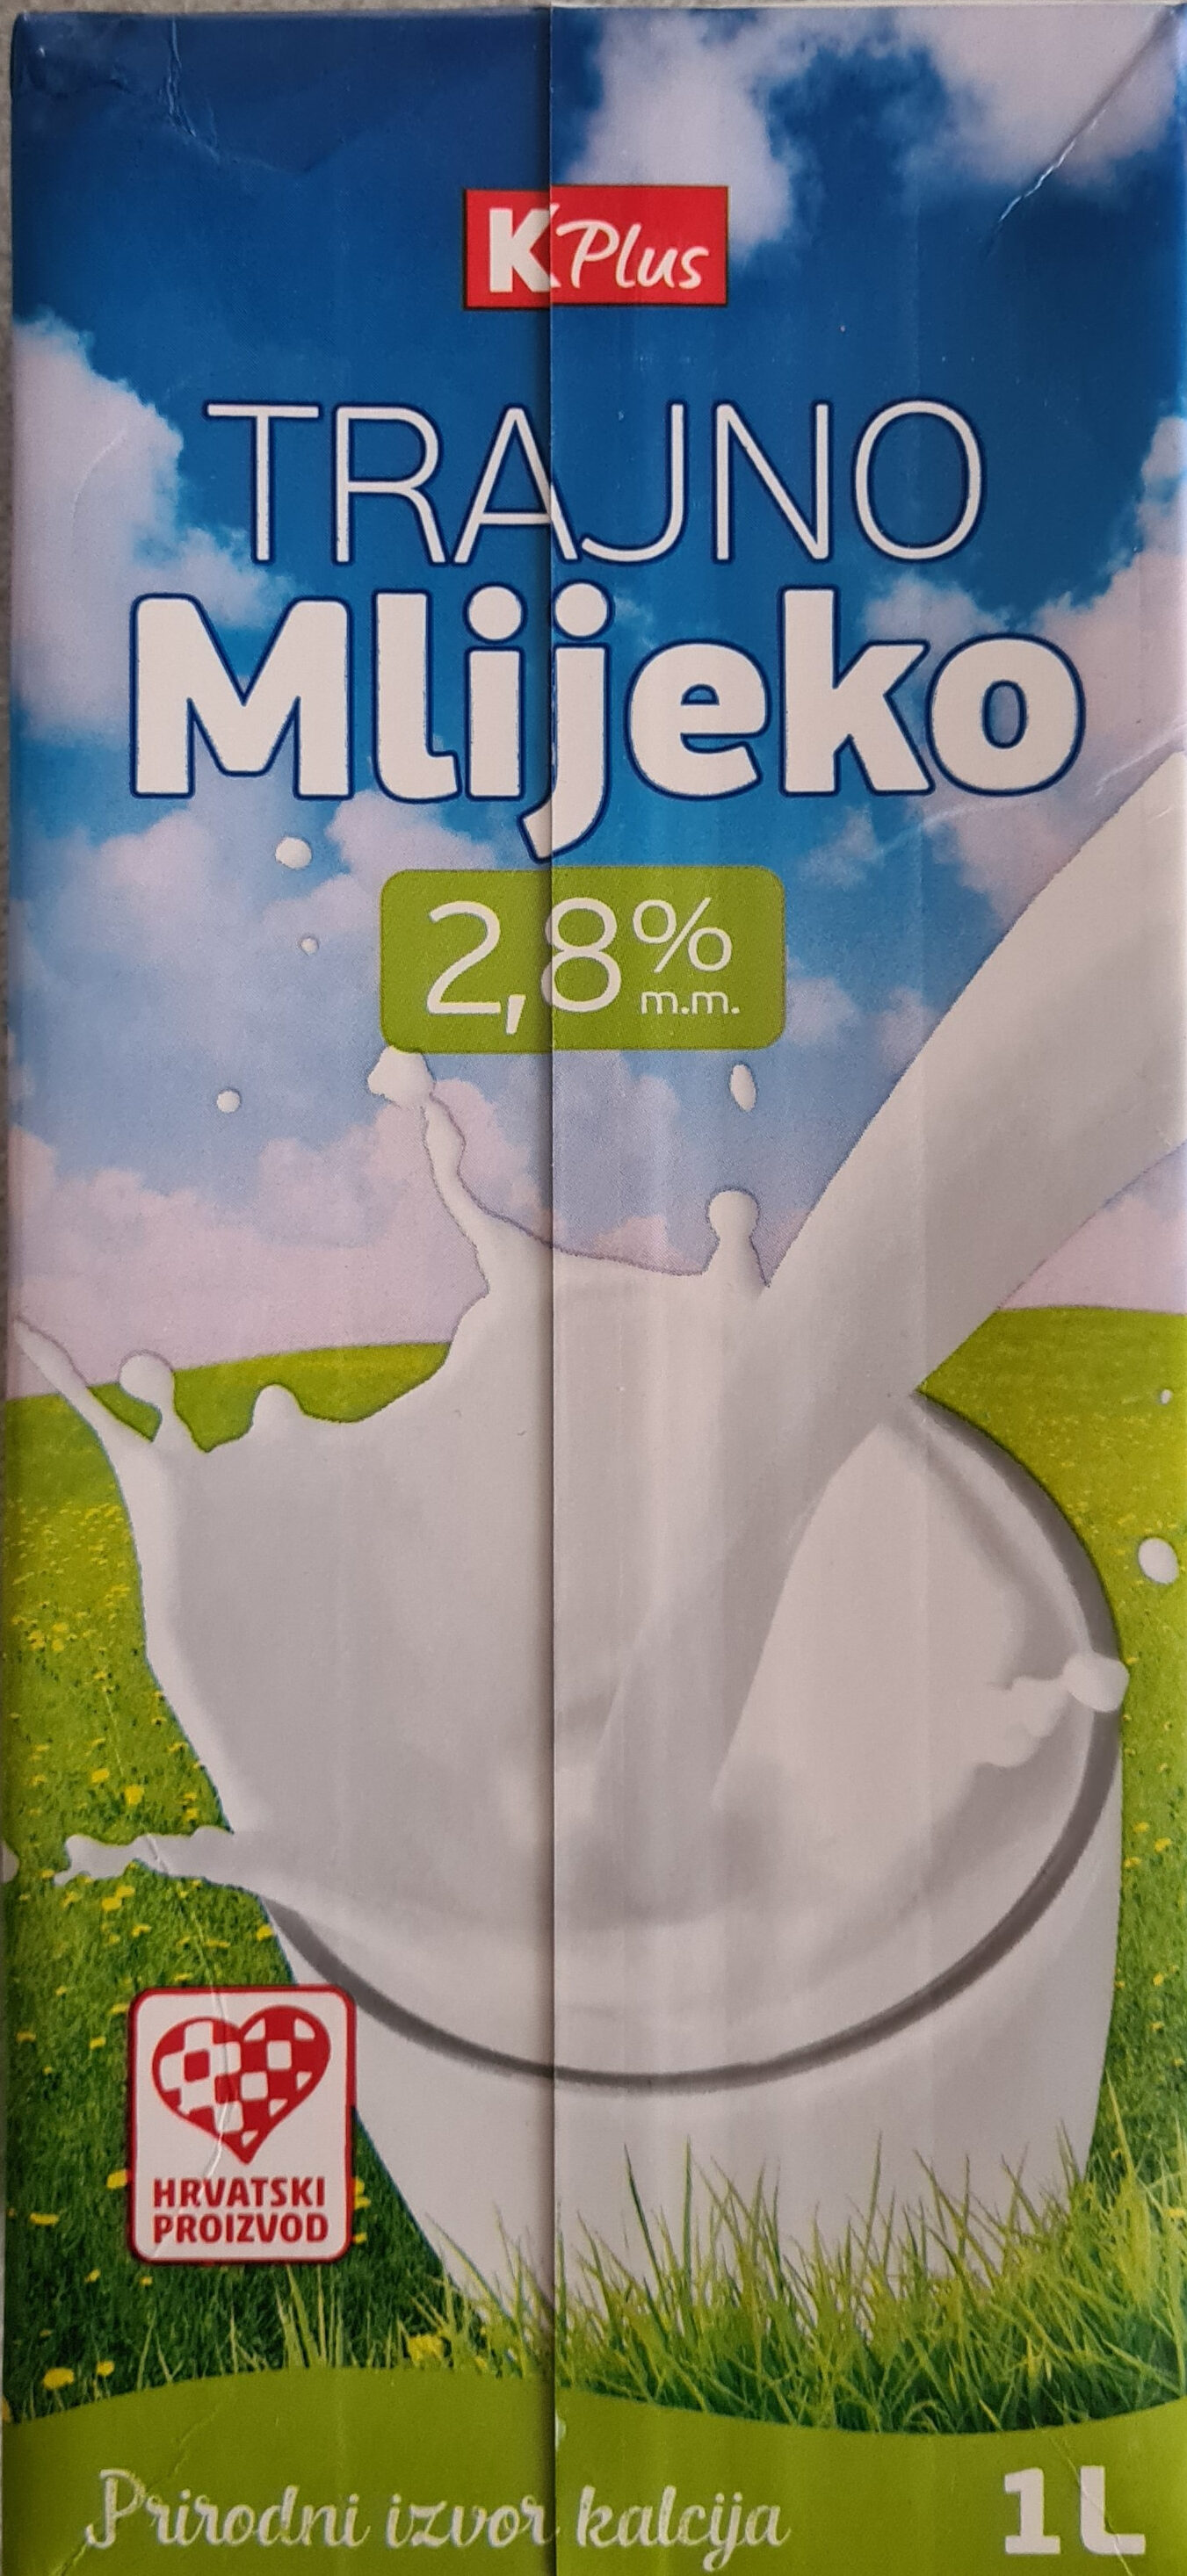 Trajno mlijeko - Product - hr